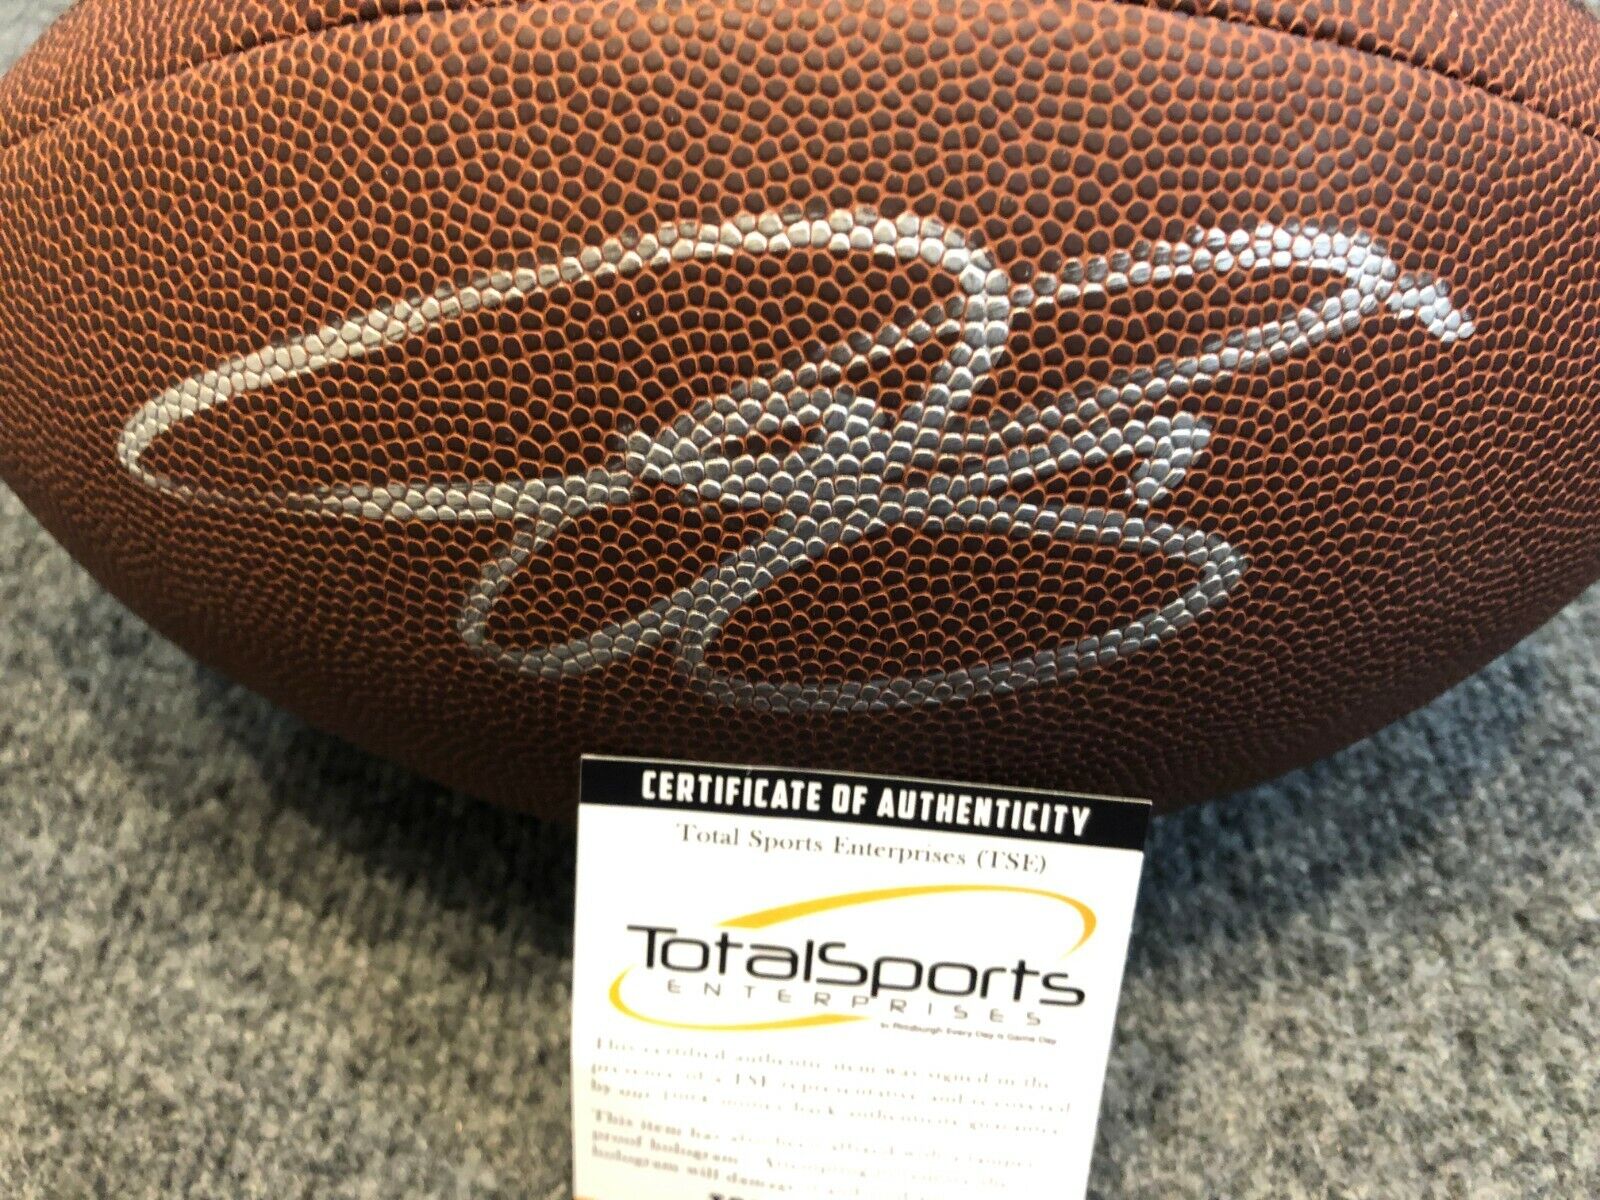 MVP Authentics New York Giants Justin Layne Autographed Signed Nfl Football Tse Coa 89.10 sports jersey framing , jersey framing